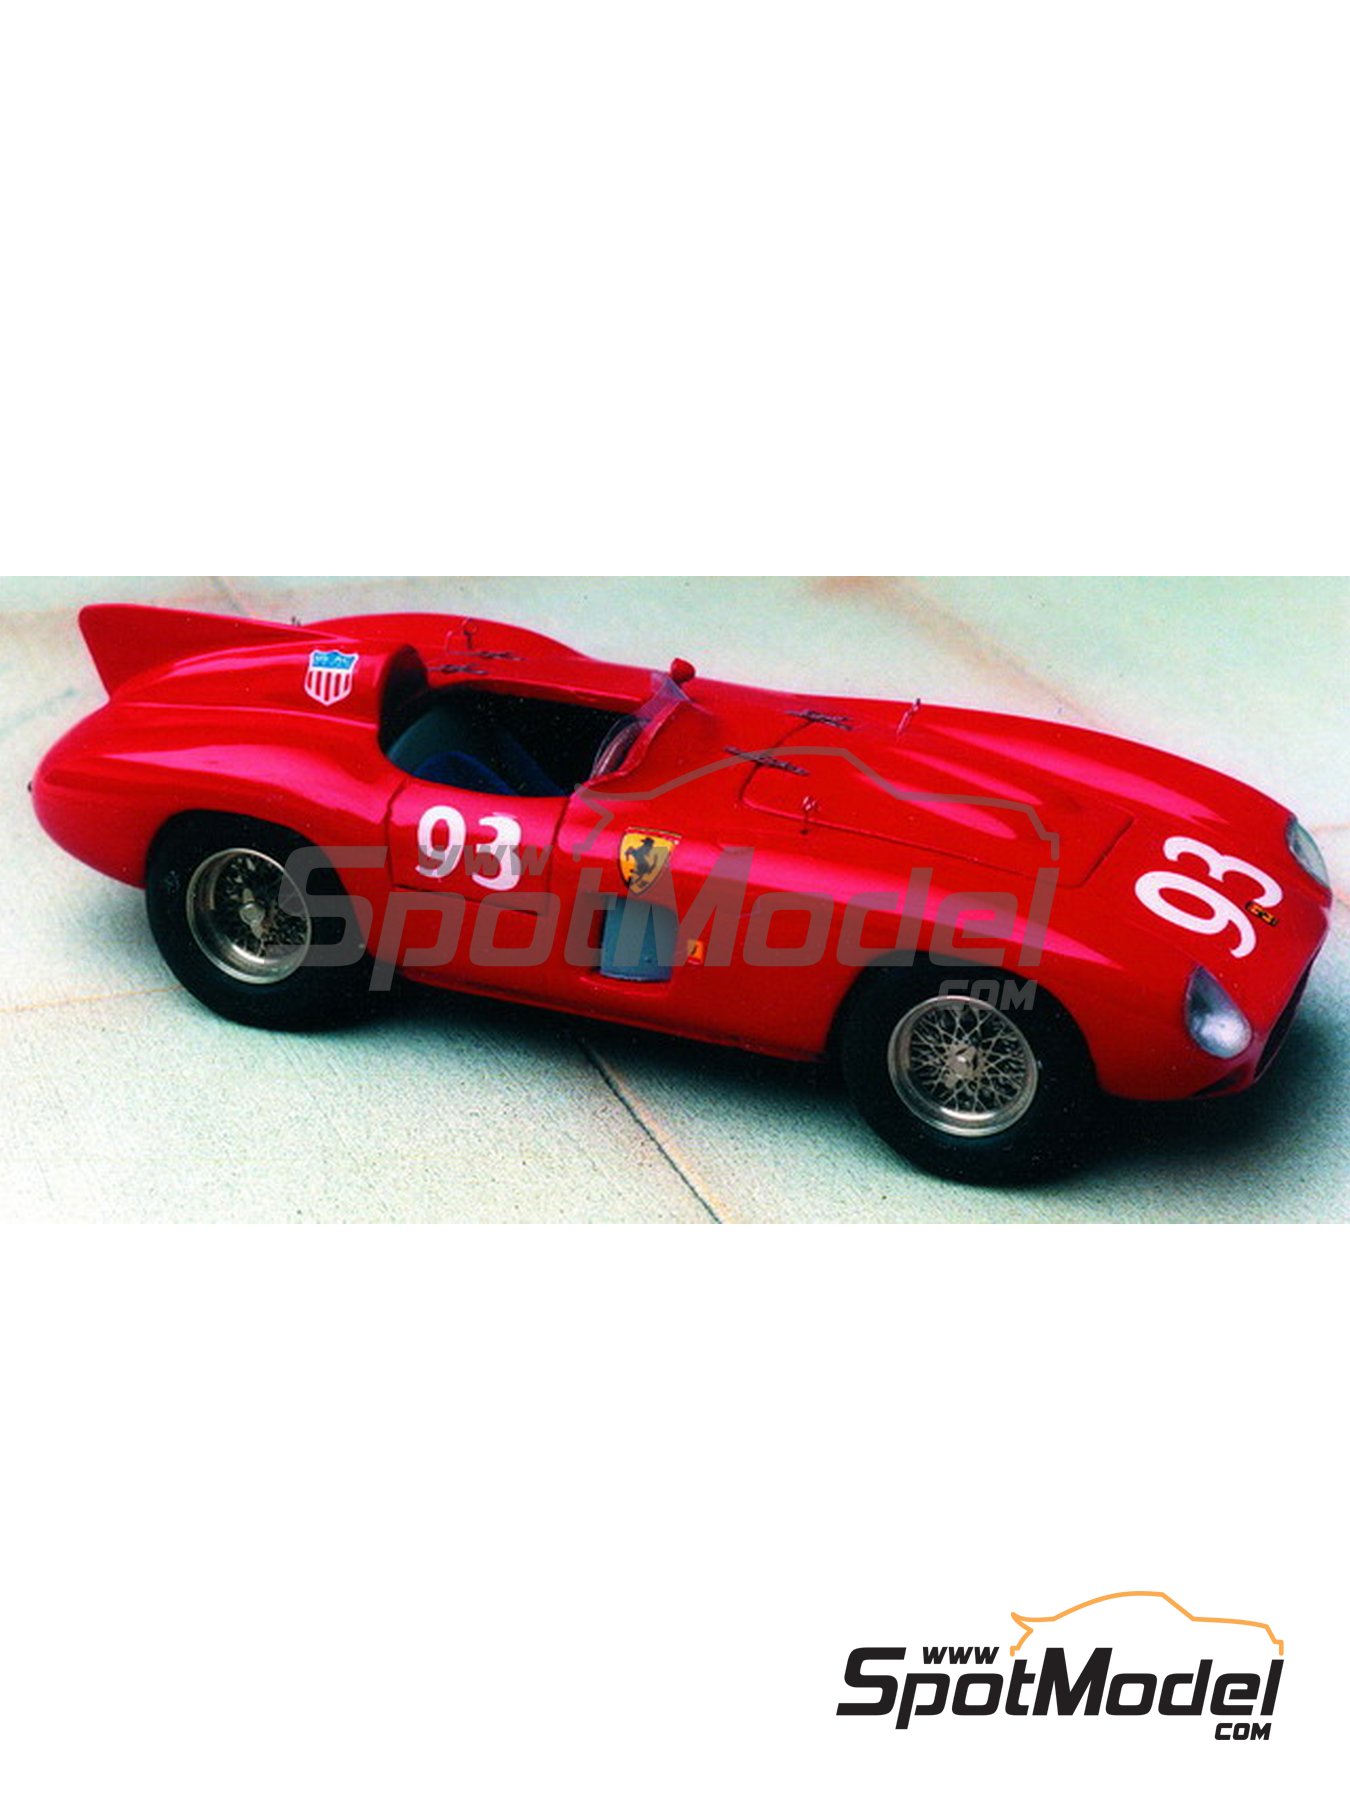 Renaissance Models Model Car Kit 1 43 Scale Ferrari 857s Sports Car Club Of America Ref 43 02c Spotmodel